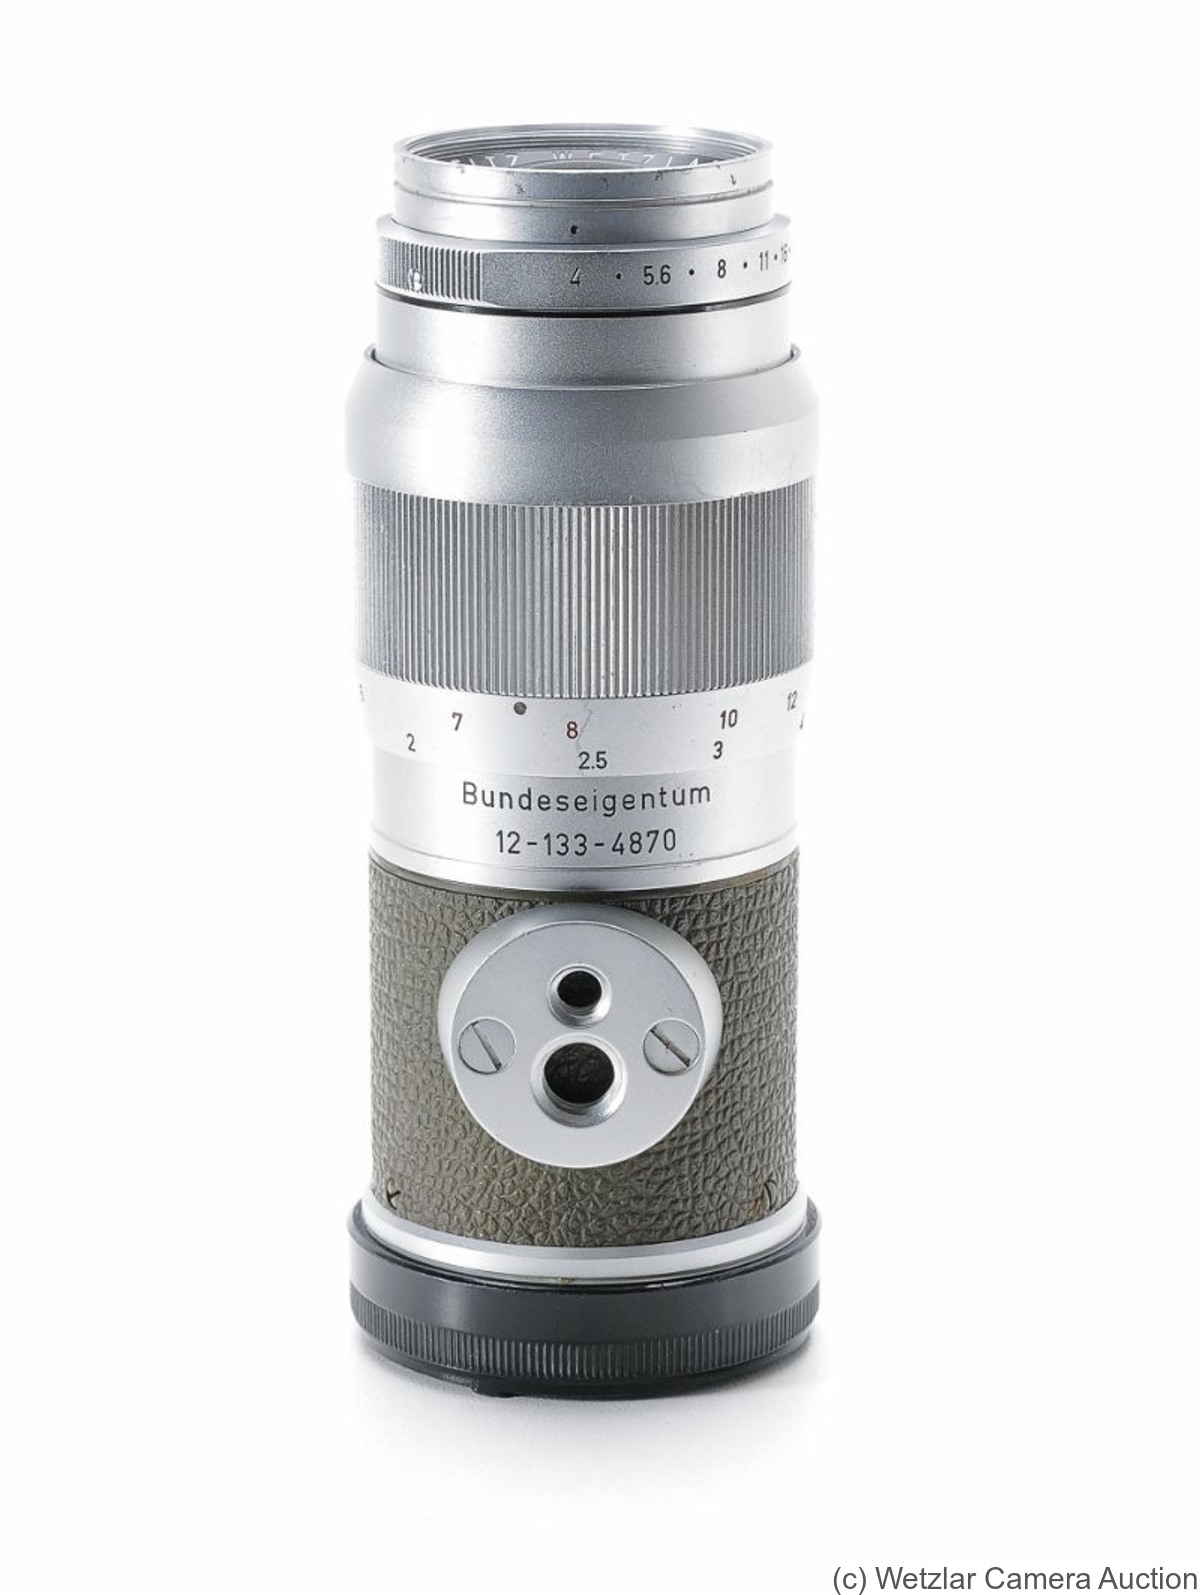 Leitz: 135mm (13.5cm) f4 Elmar (BM, chrome, olive) Bundeseigentum camera